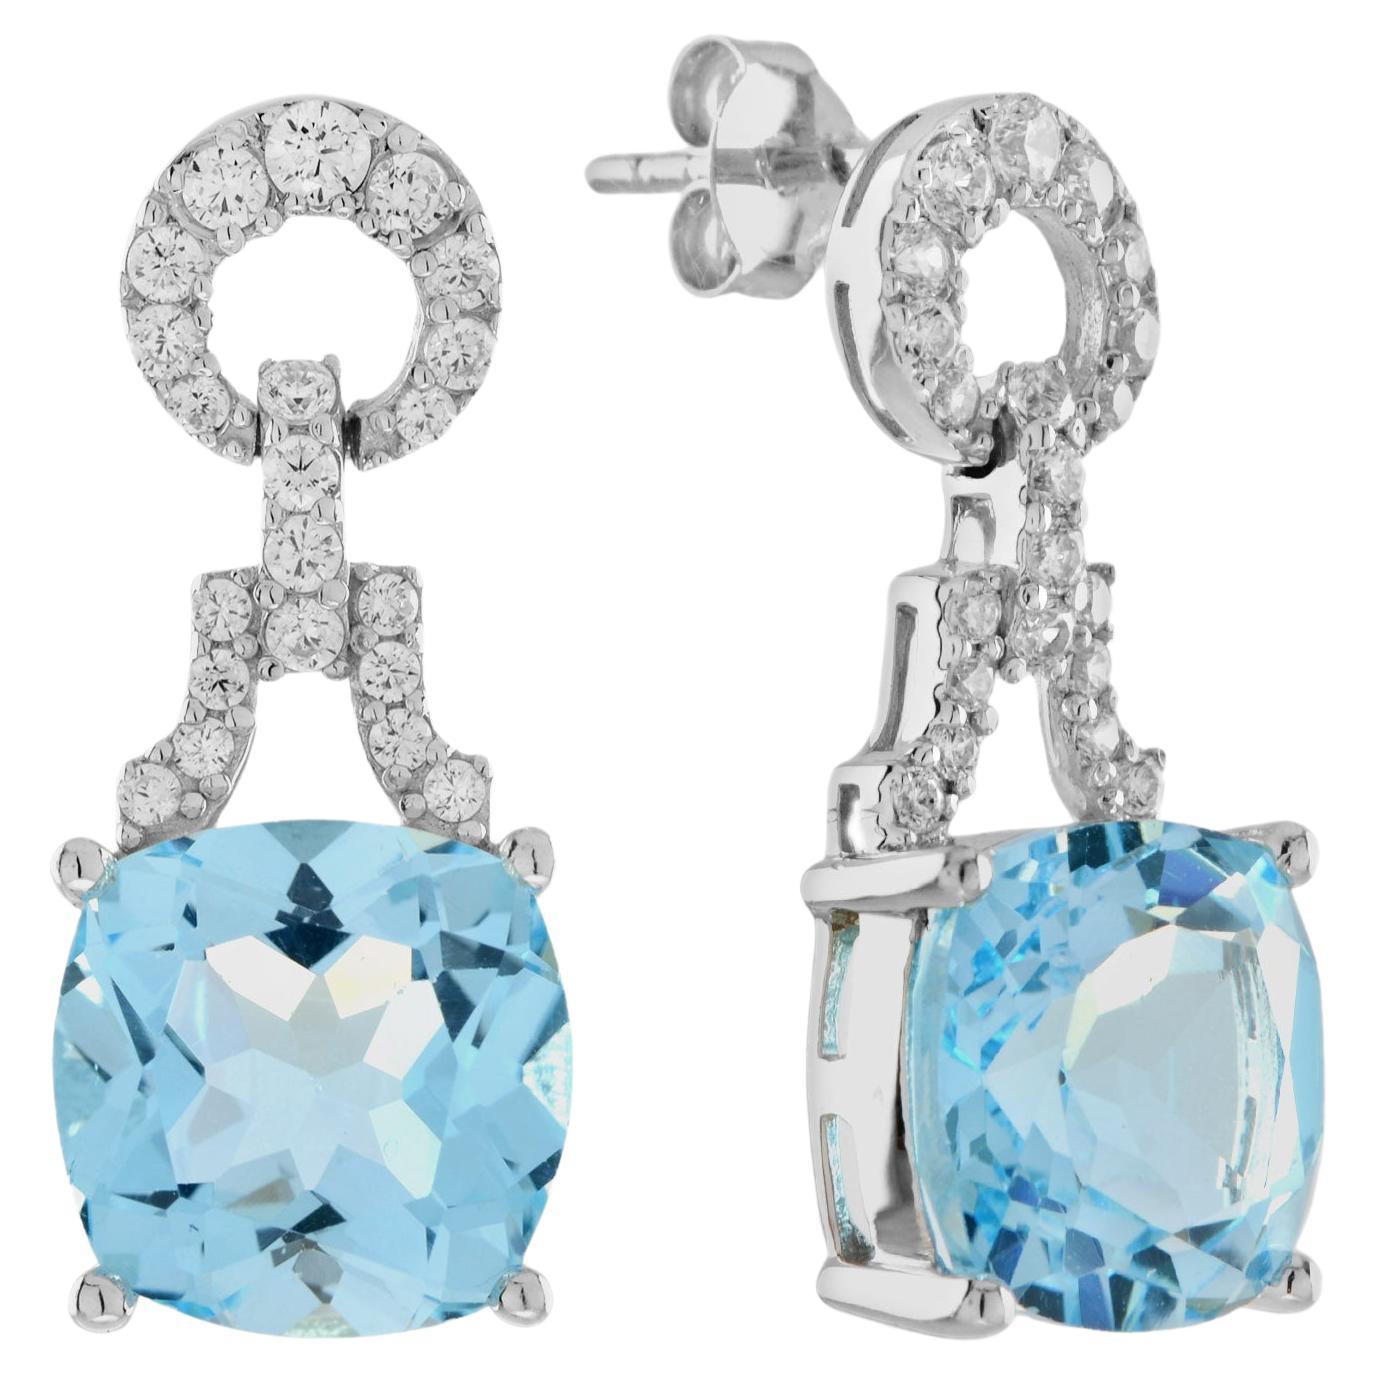 Blue Topaz and Diamond Art Deco Style Drop Earrings in 14k White Gold